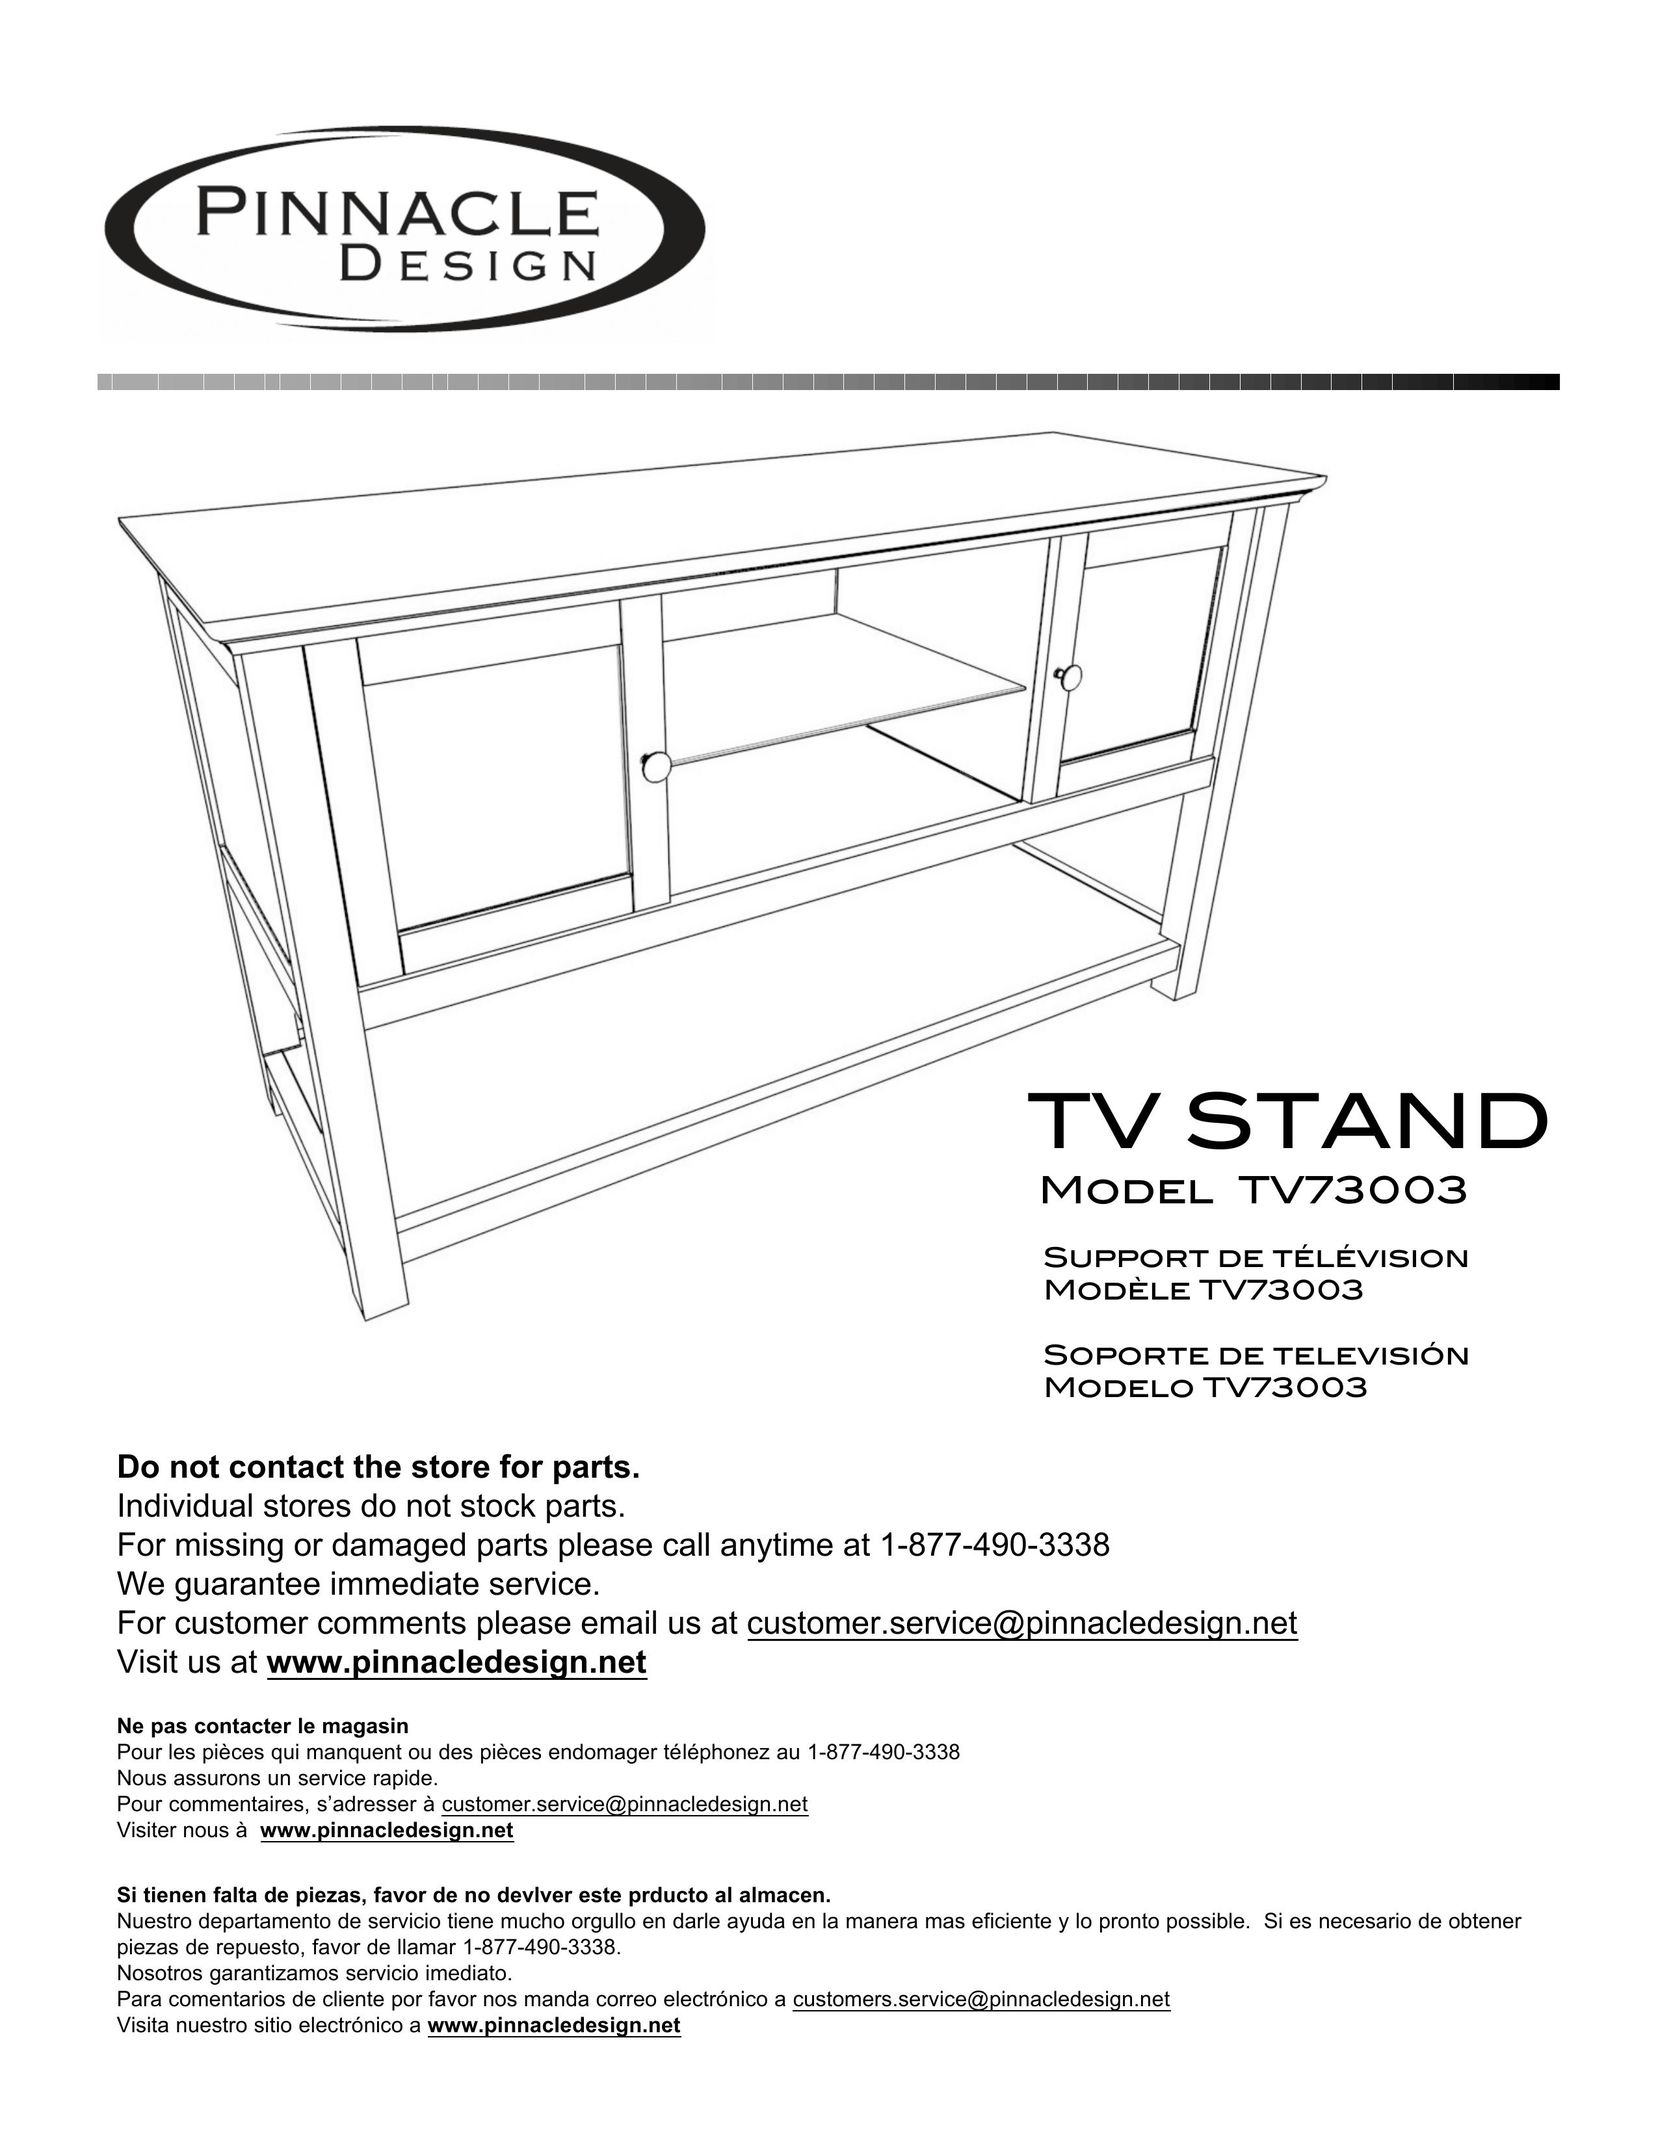 Pinnacle Design TV73003 TV Video Accessories User Manual